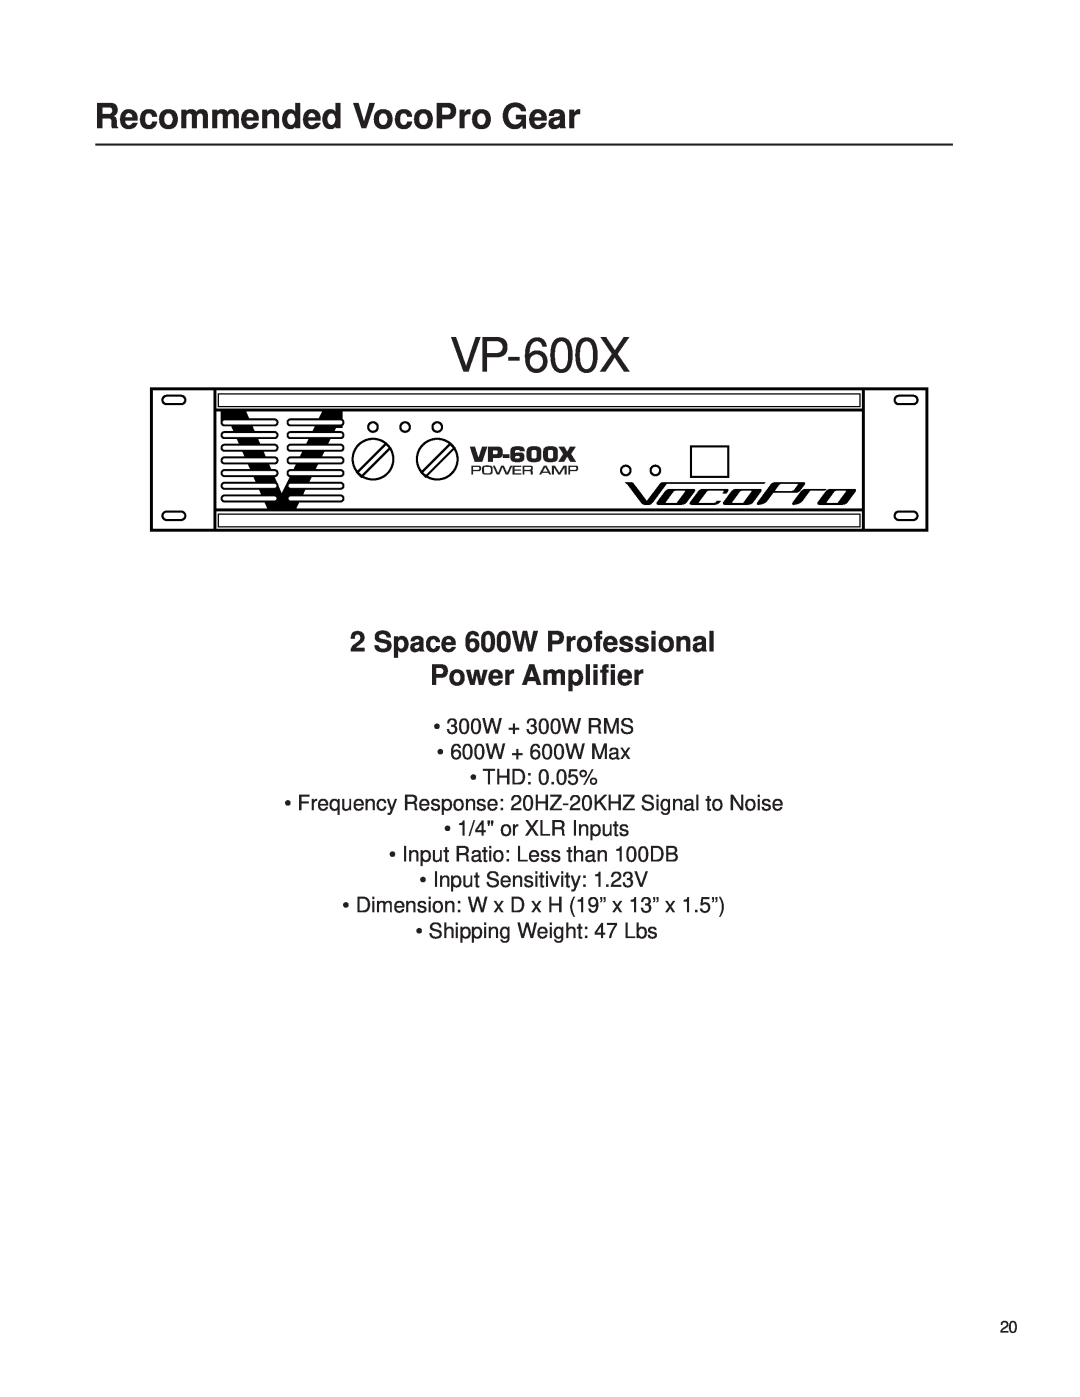 VocoPro DA-3600Pro2 owner manual VP-600X, Space 600W Professional Power Amplifier, Recommended VocoPro Gear 